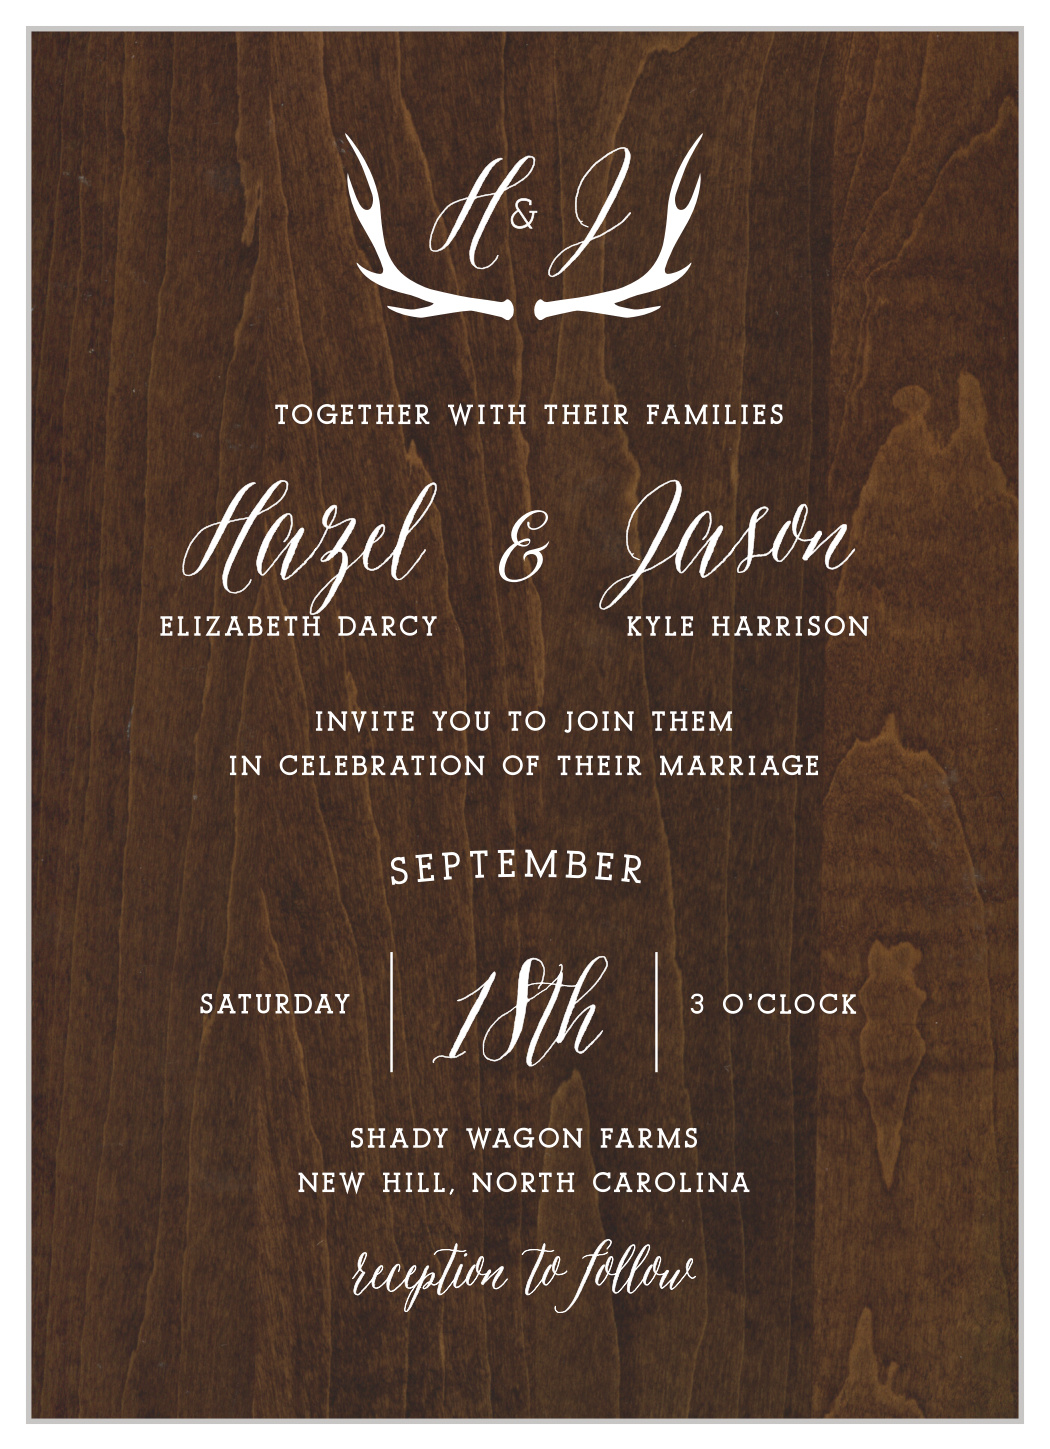 Rustic Wood Wedding Invitations By Basic Invite